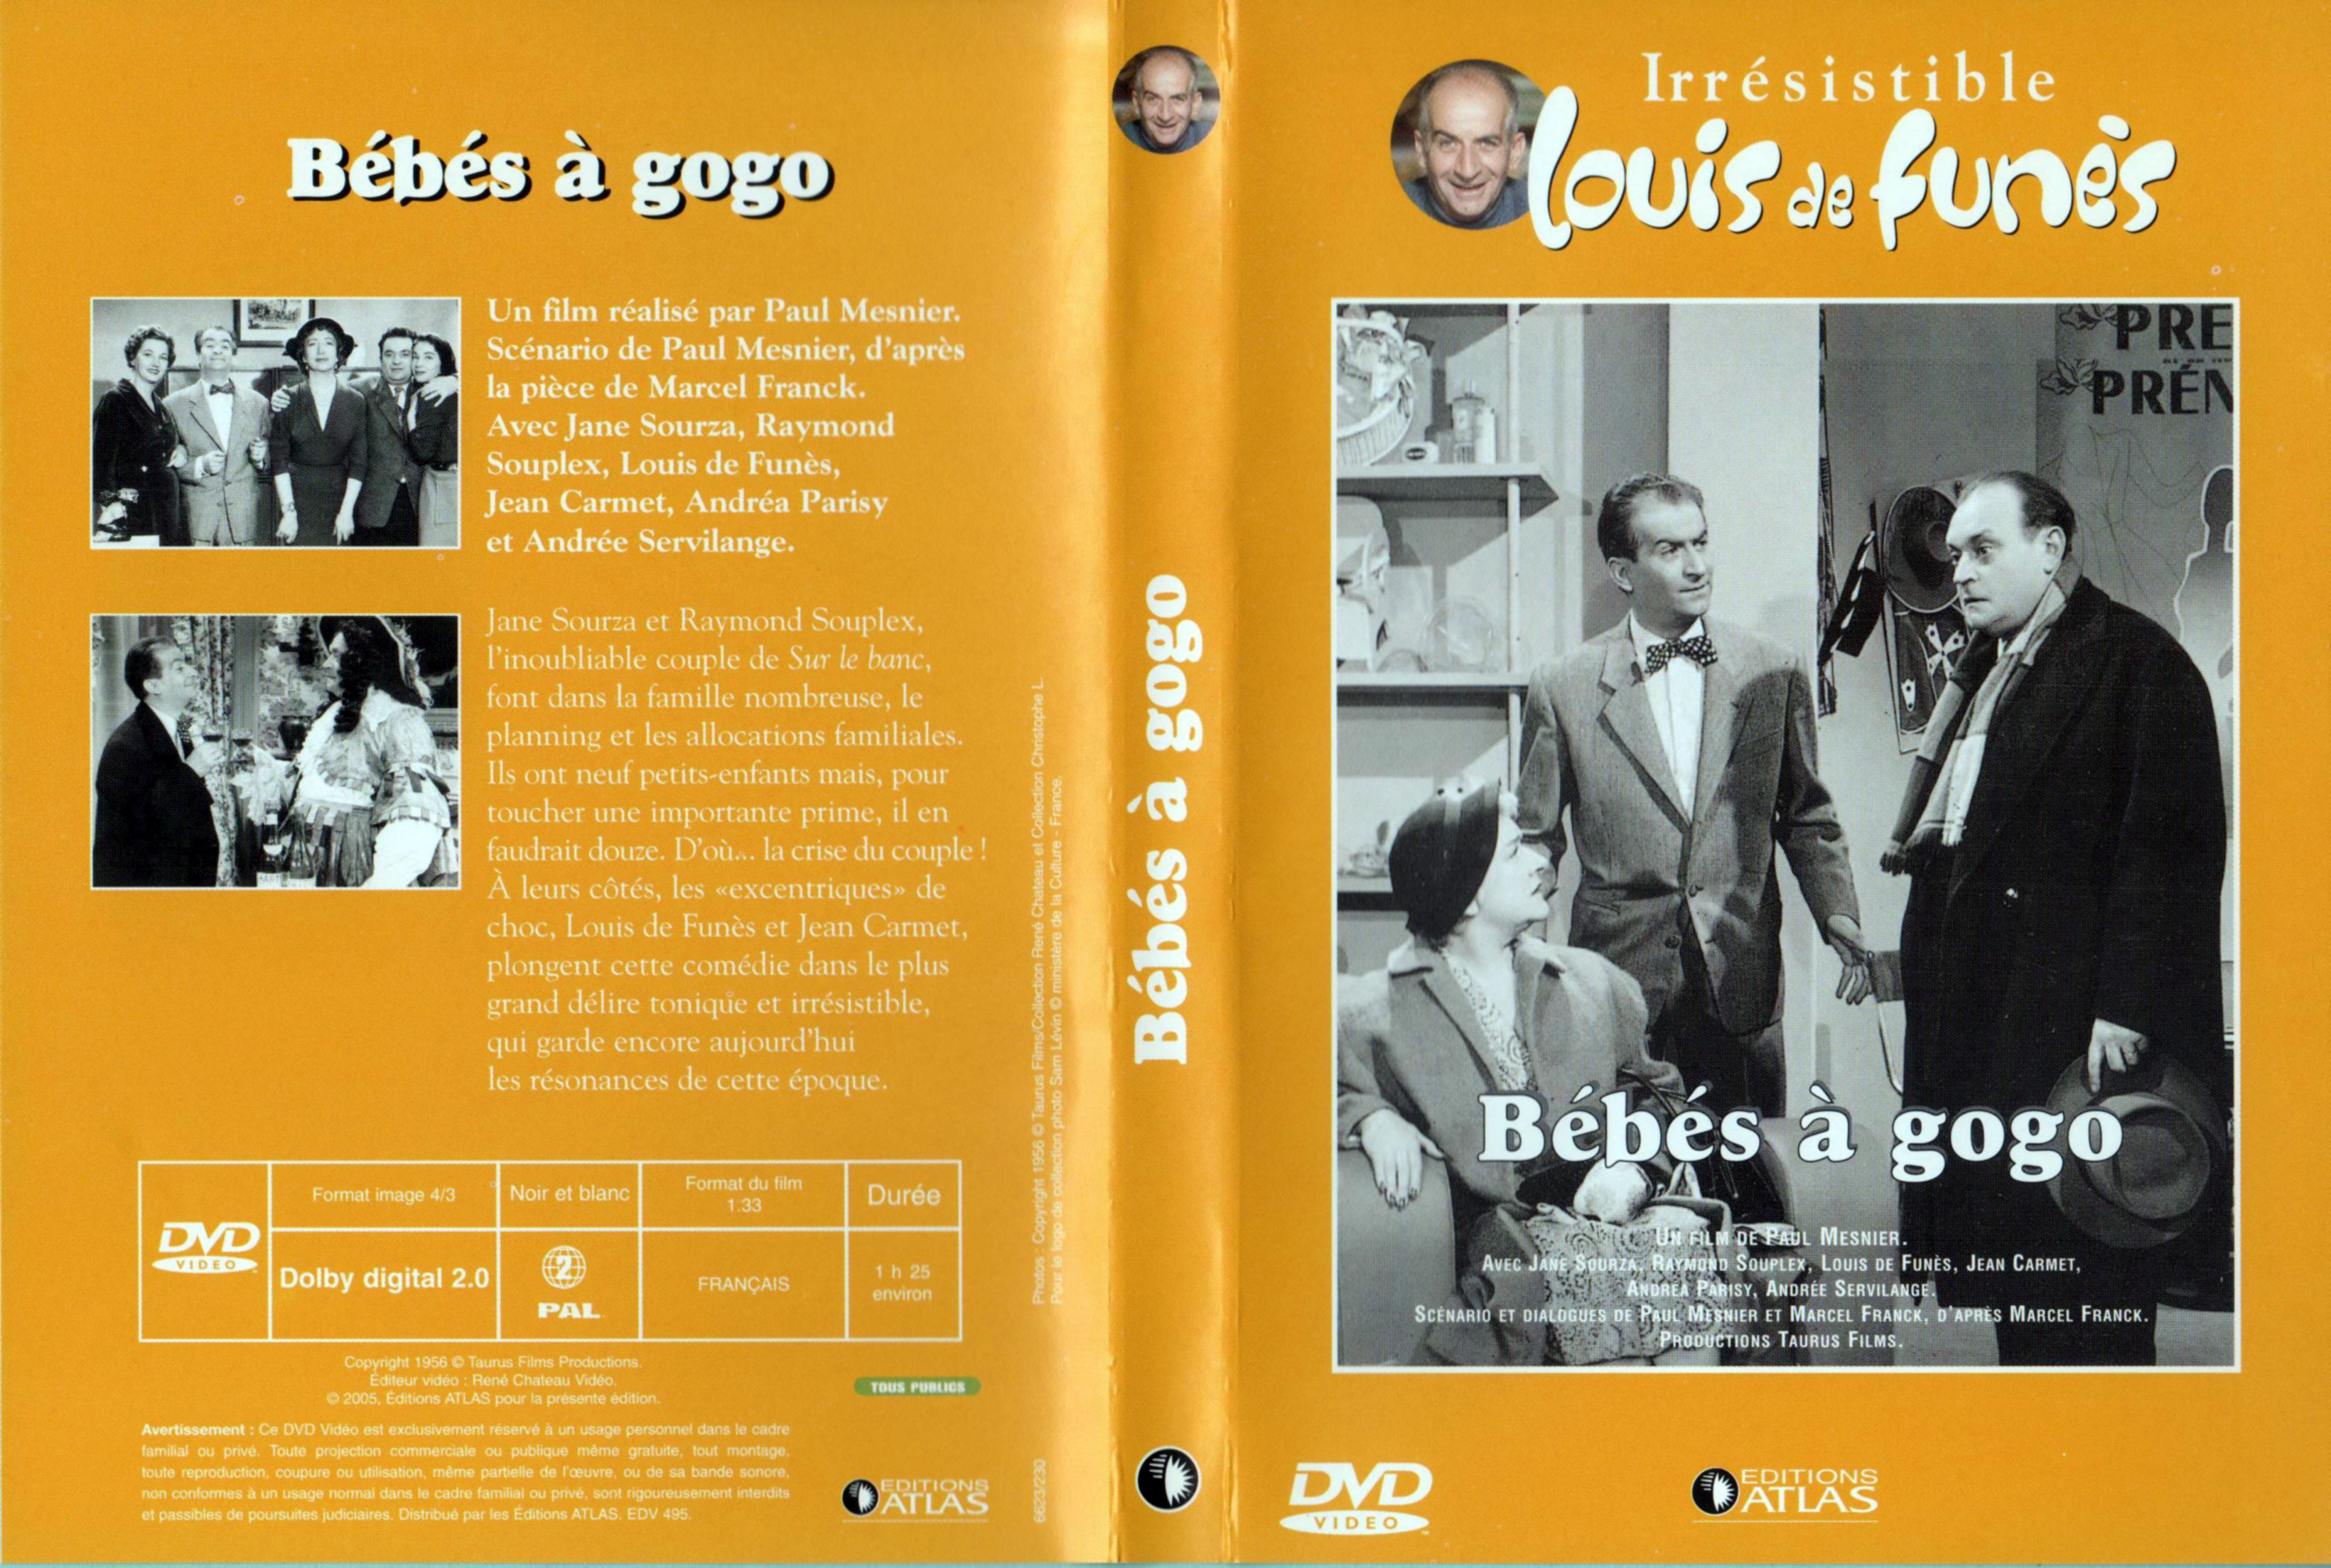 Jaquette DVD Bbs  gogo v2